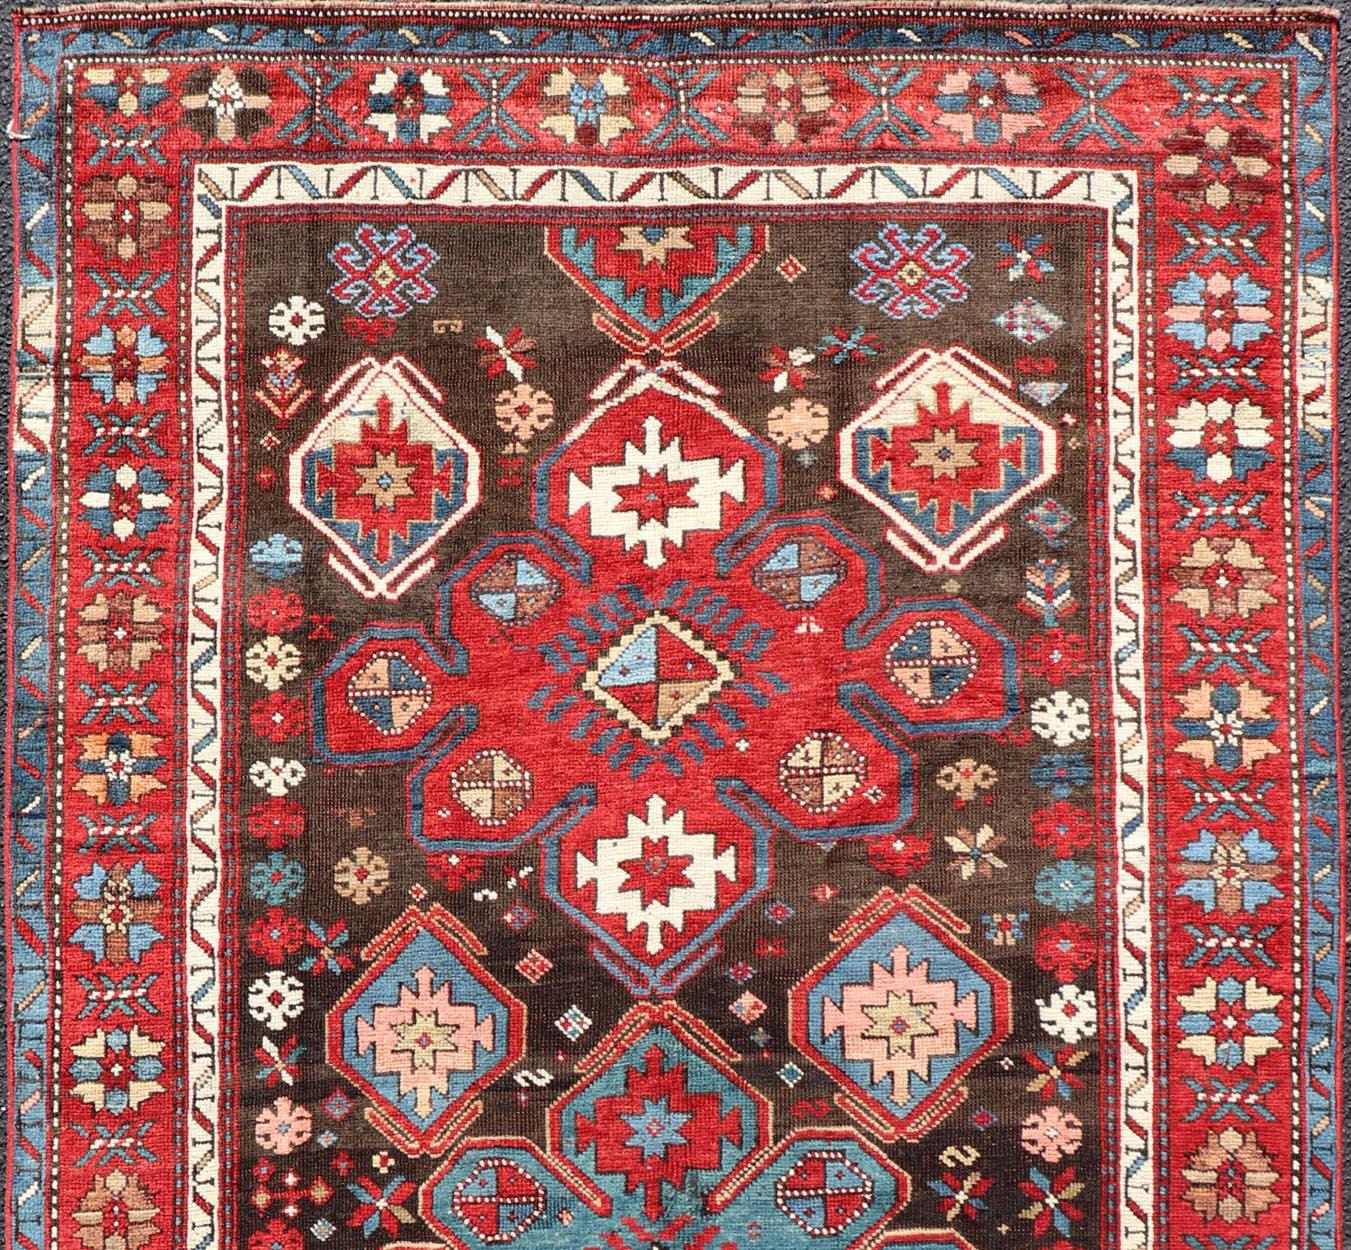 Antique Tribal Caucasian Kazak Rug in Brown and Red with Geometric Design. Keivan Woven Arts rug EMB-22141-15044, country of origin / type: Caucuses / Caucasian Kazak, circa 1890.
Measures: 4'0 x 7'5 
Brilliant Kazak rugs are among the most